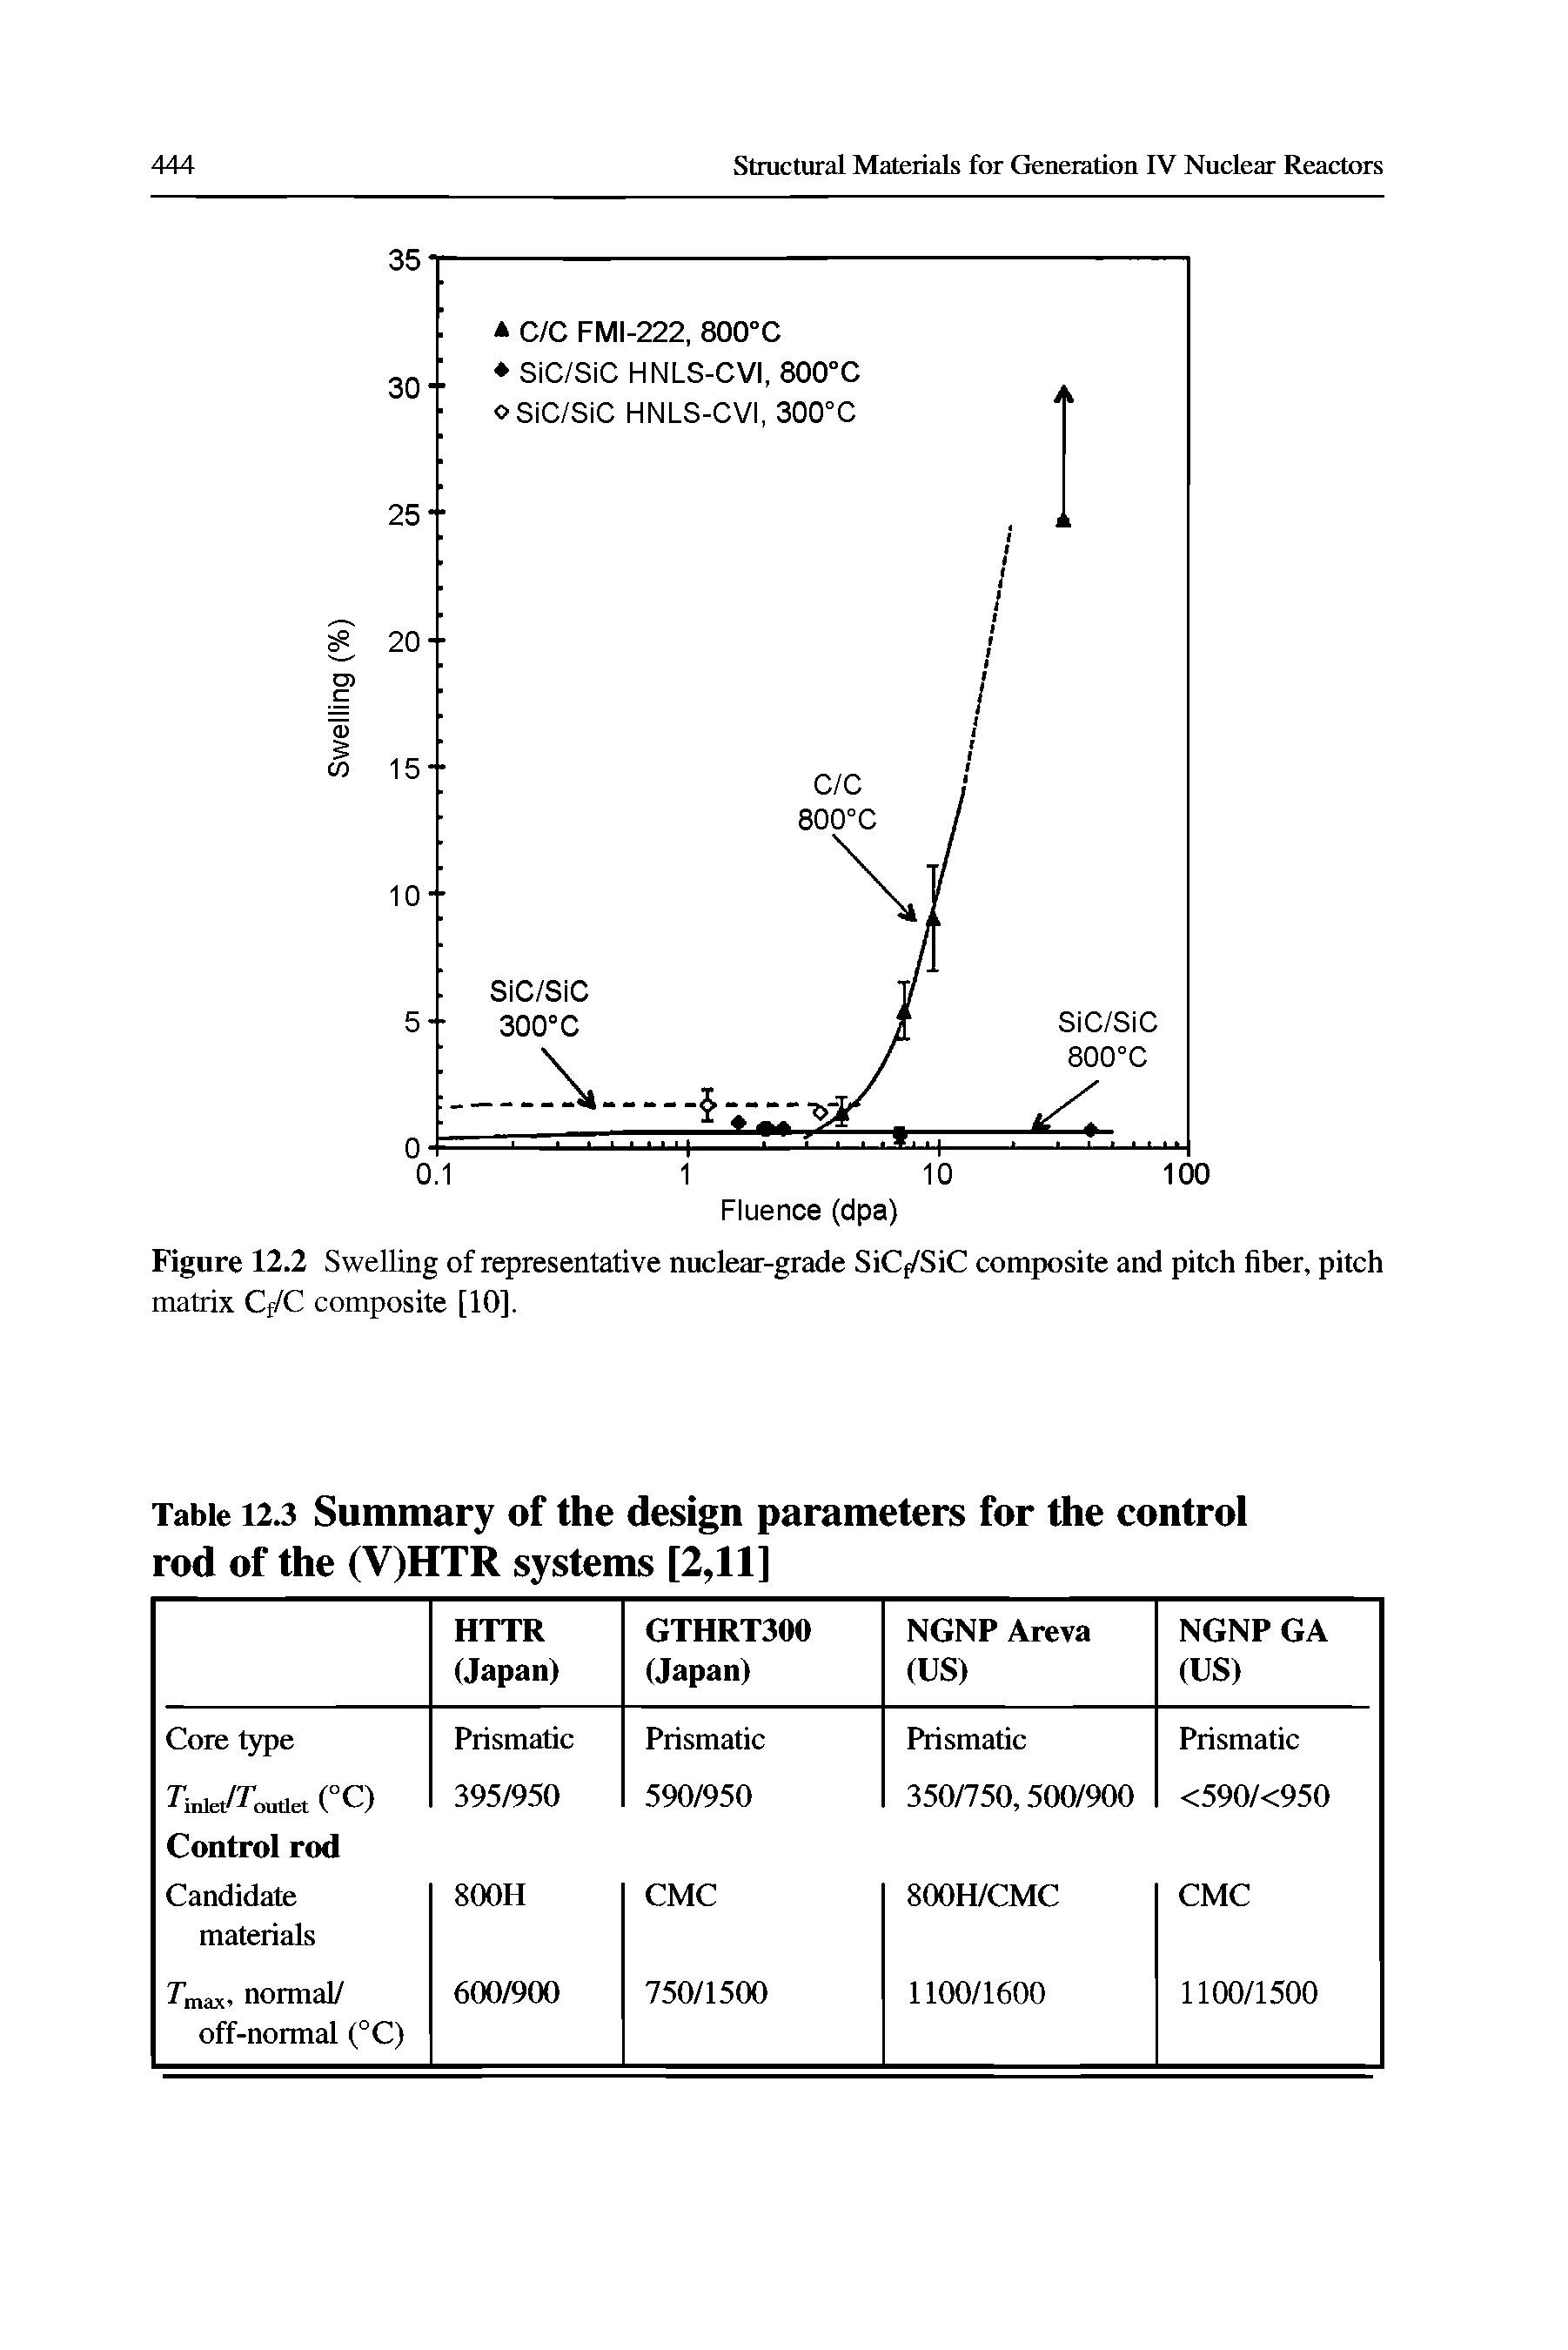 Figure 12.2 Swelling of representative nuclear-grade SiCf/SiC composite and pitch fiber, pitch matrix Cf/C composite [10].